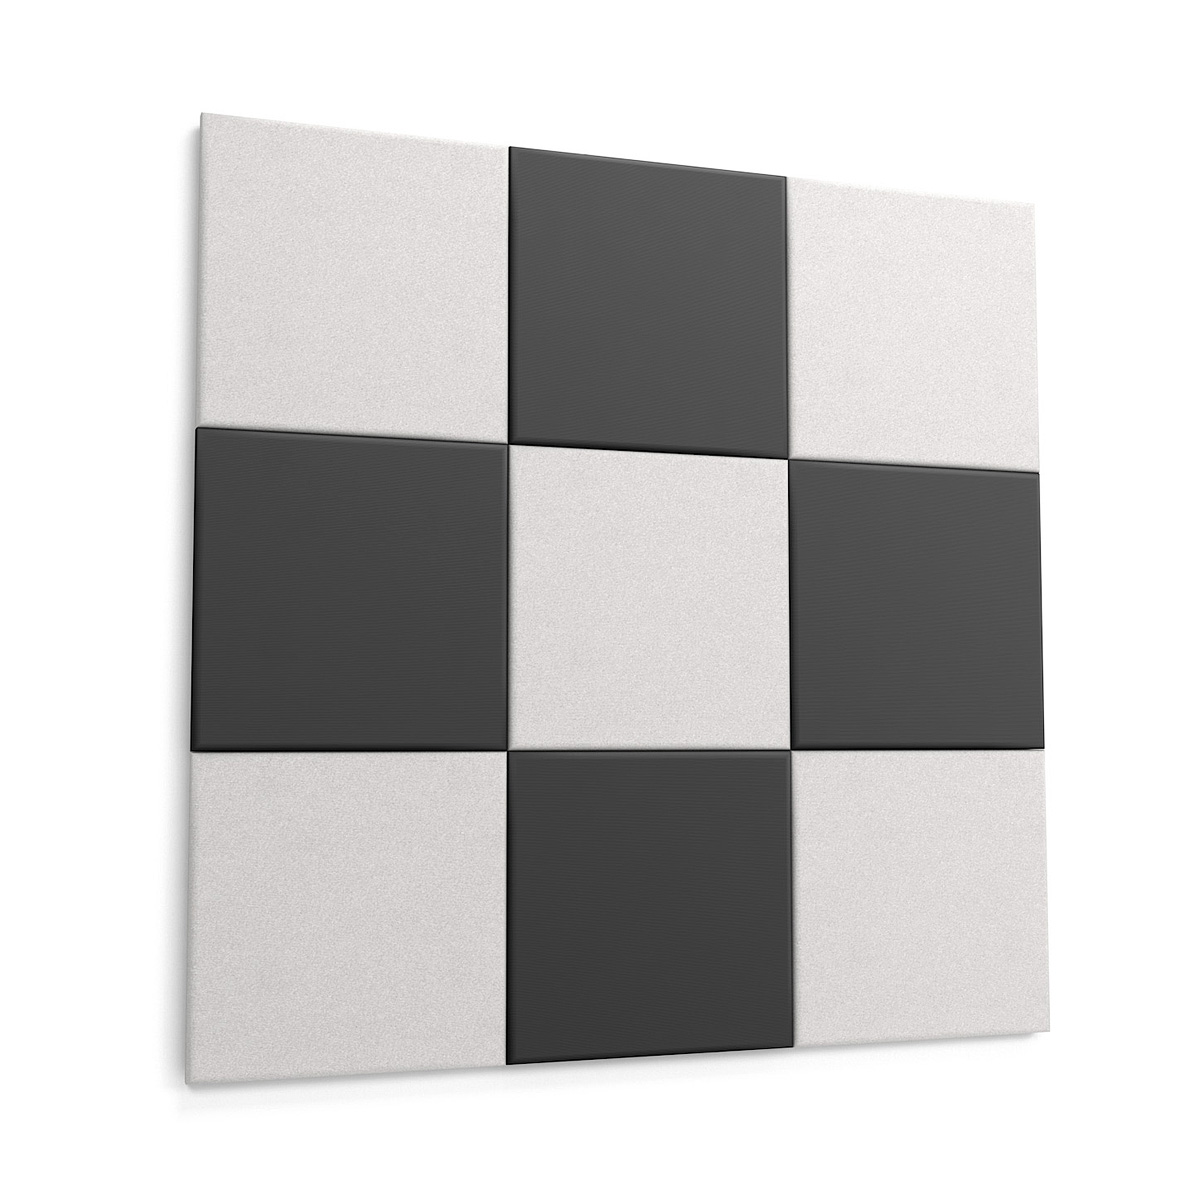 QUADRUM™ Square Acoustic Panels - Mix And Match Colours For Decorative Feature Walls